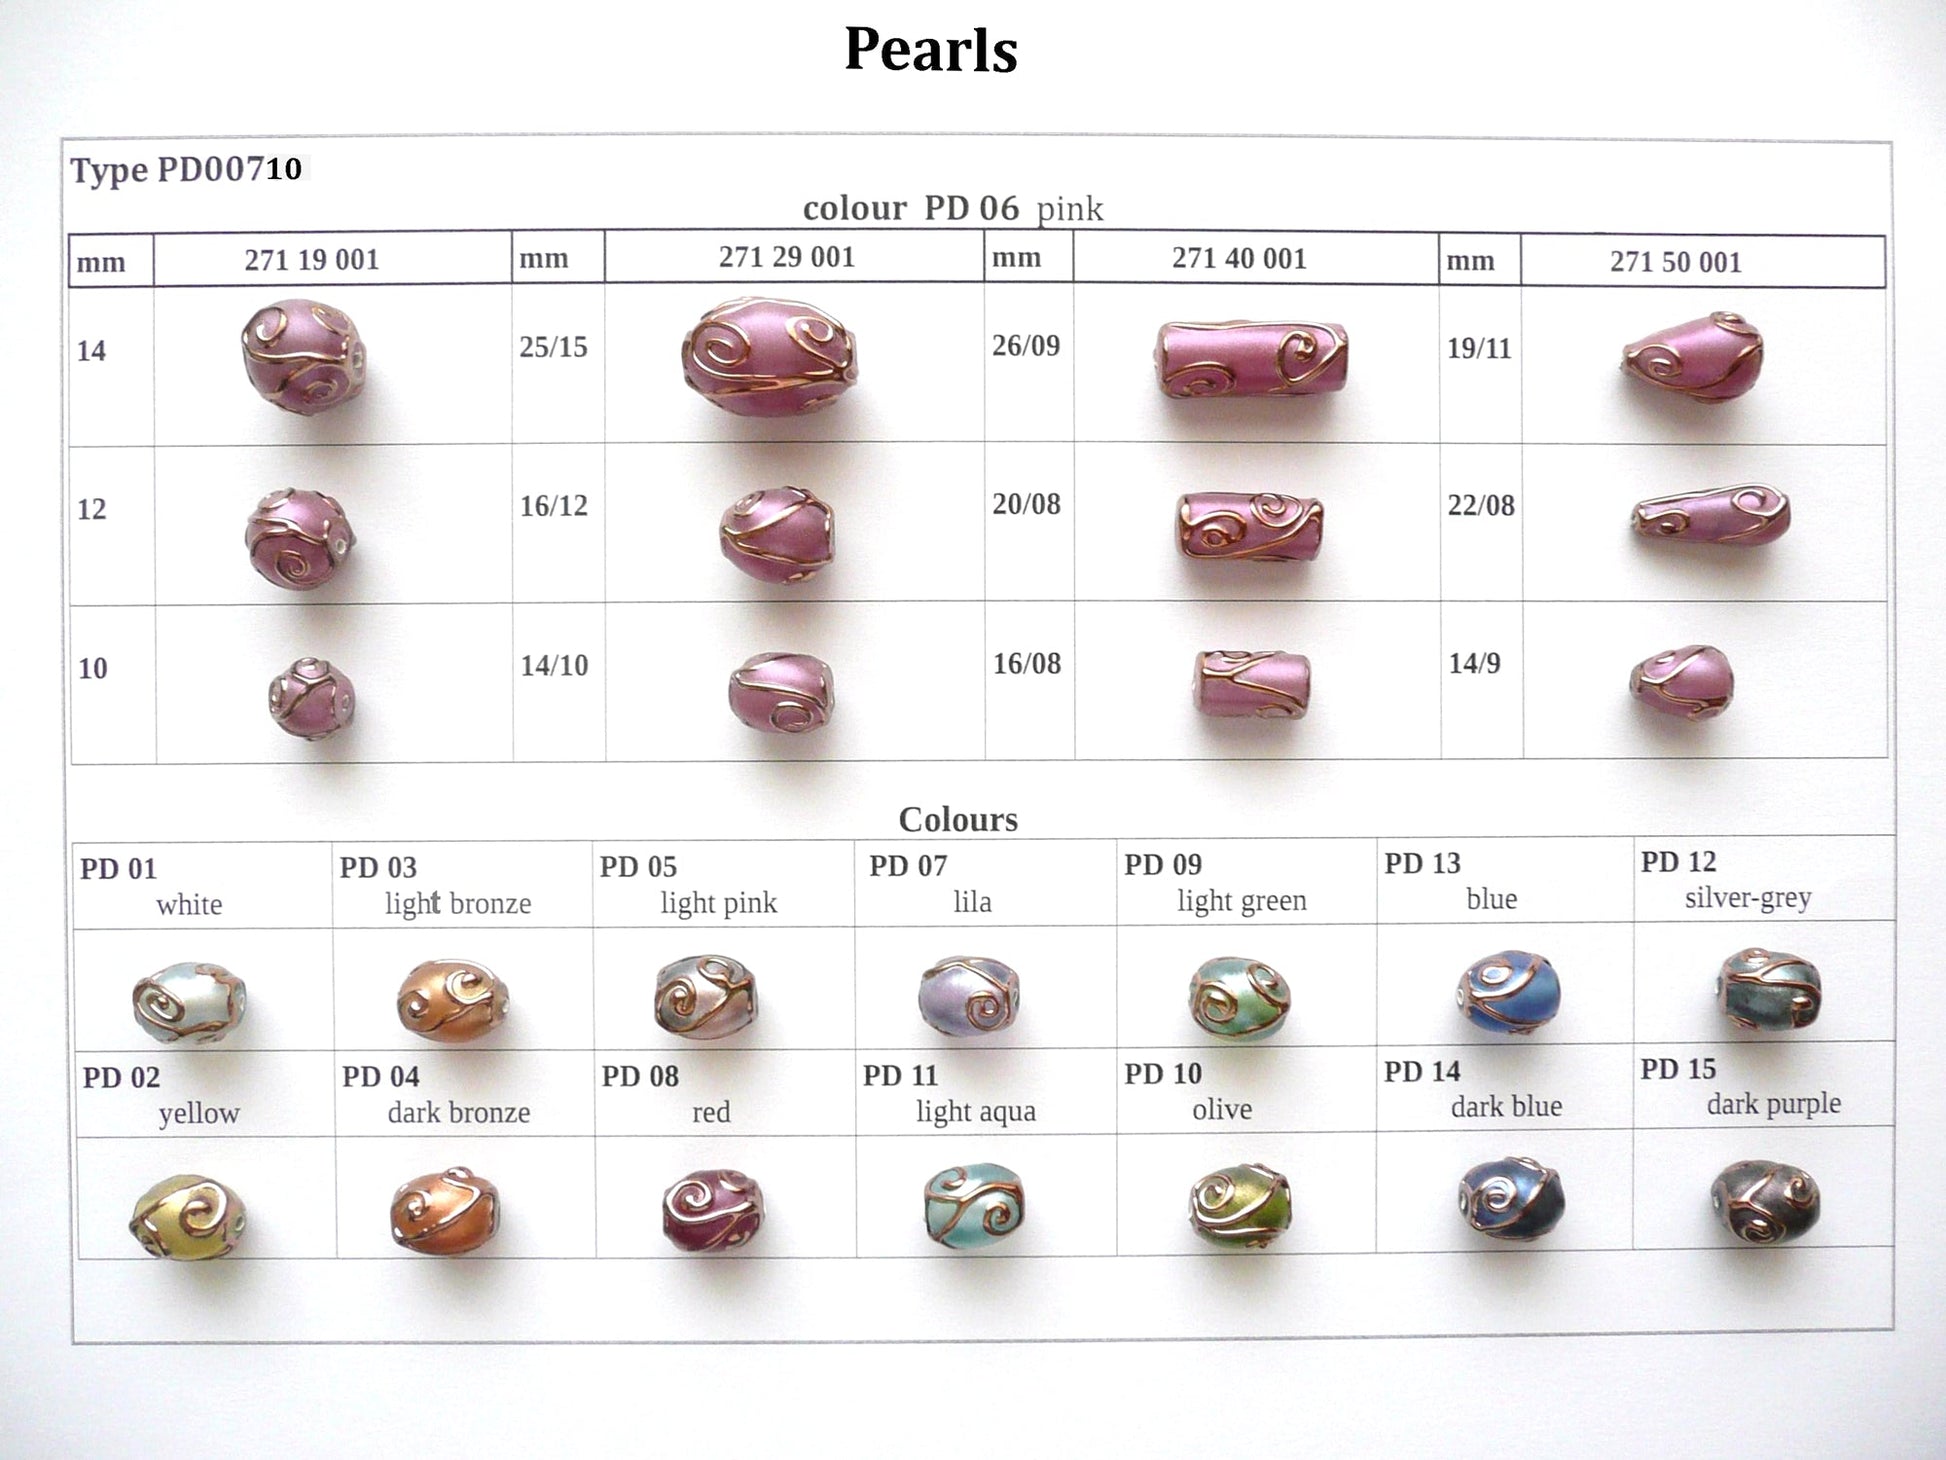 30 pcs Lampwork Beads Pearl Decor PD710 / Teardrop/Pear (271-50-001), Handmade, Preciosa Glass, Czech Republic